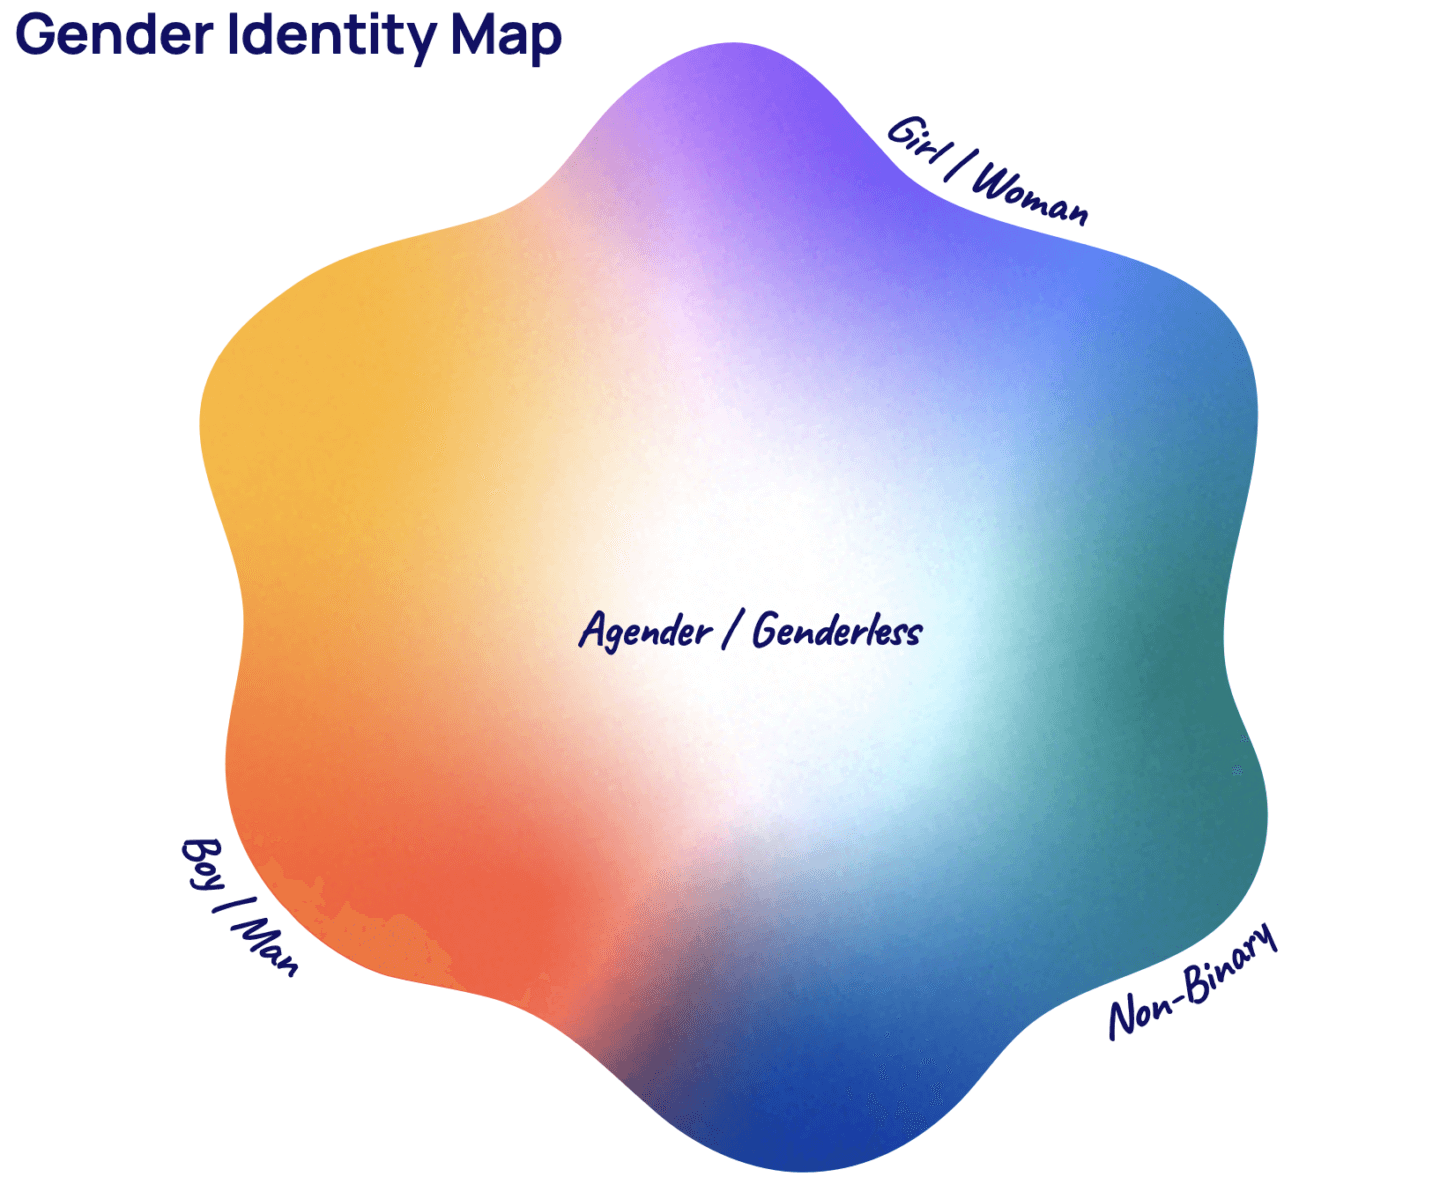 Gender identity map